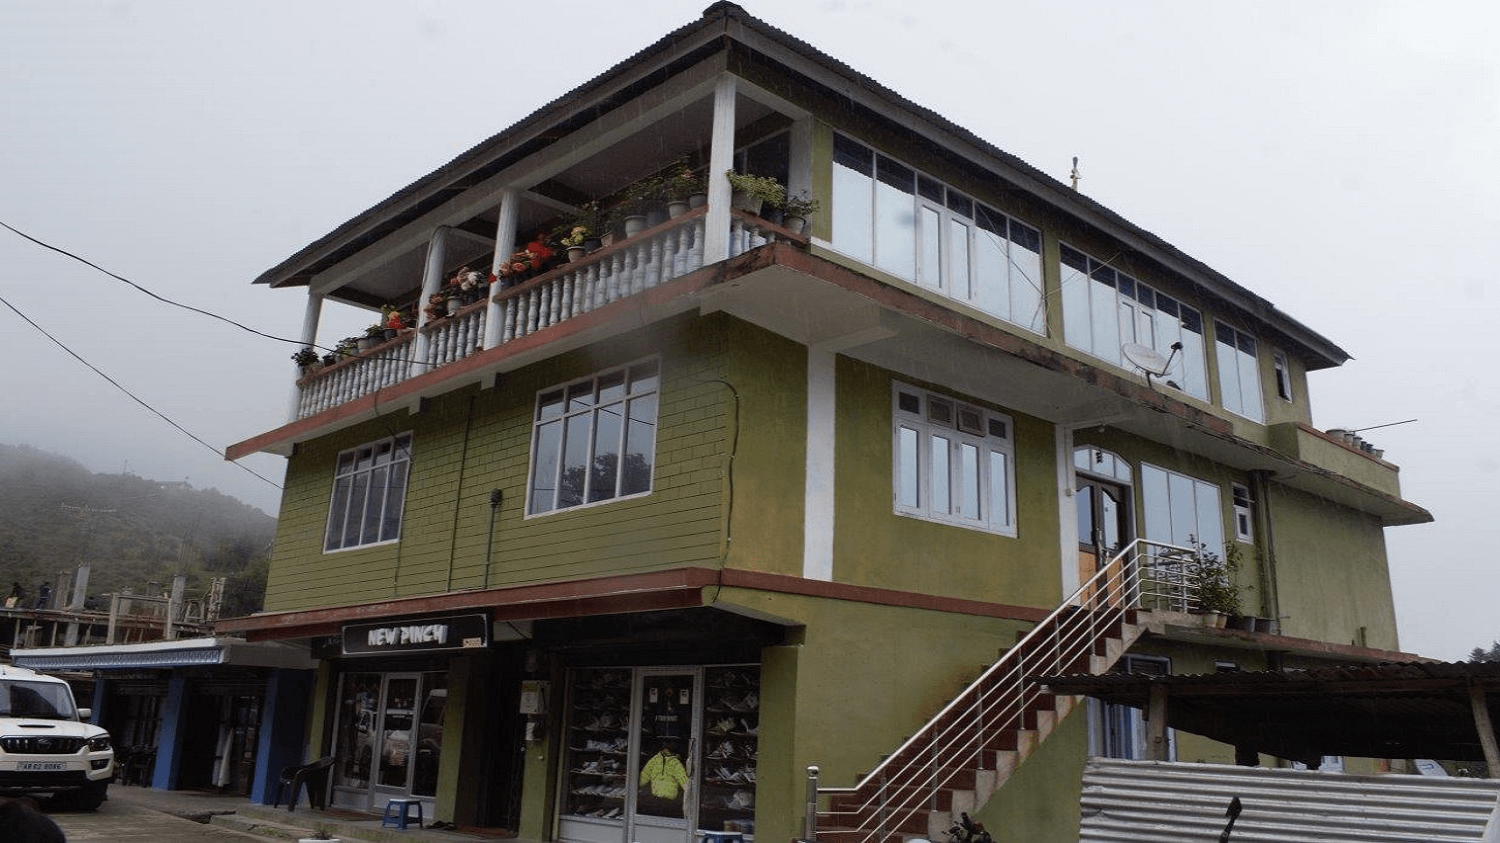 Yankey Homestay, Tawang, Arunachal Pradesh, India